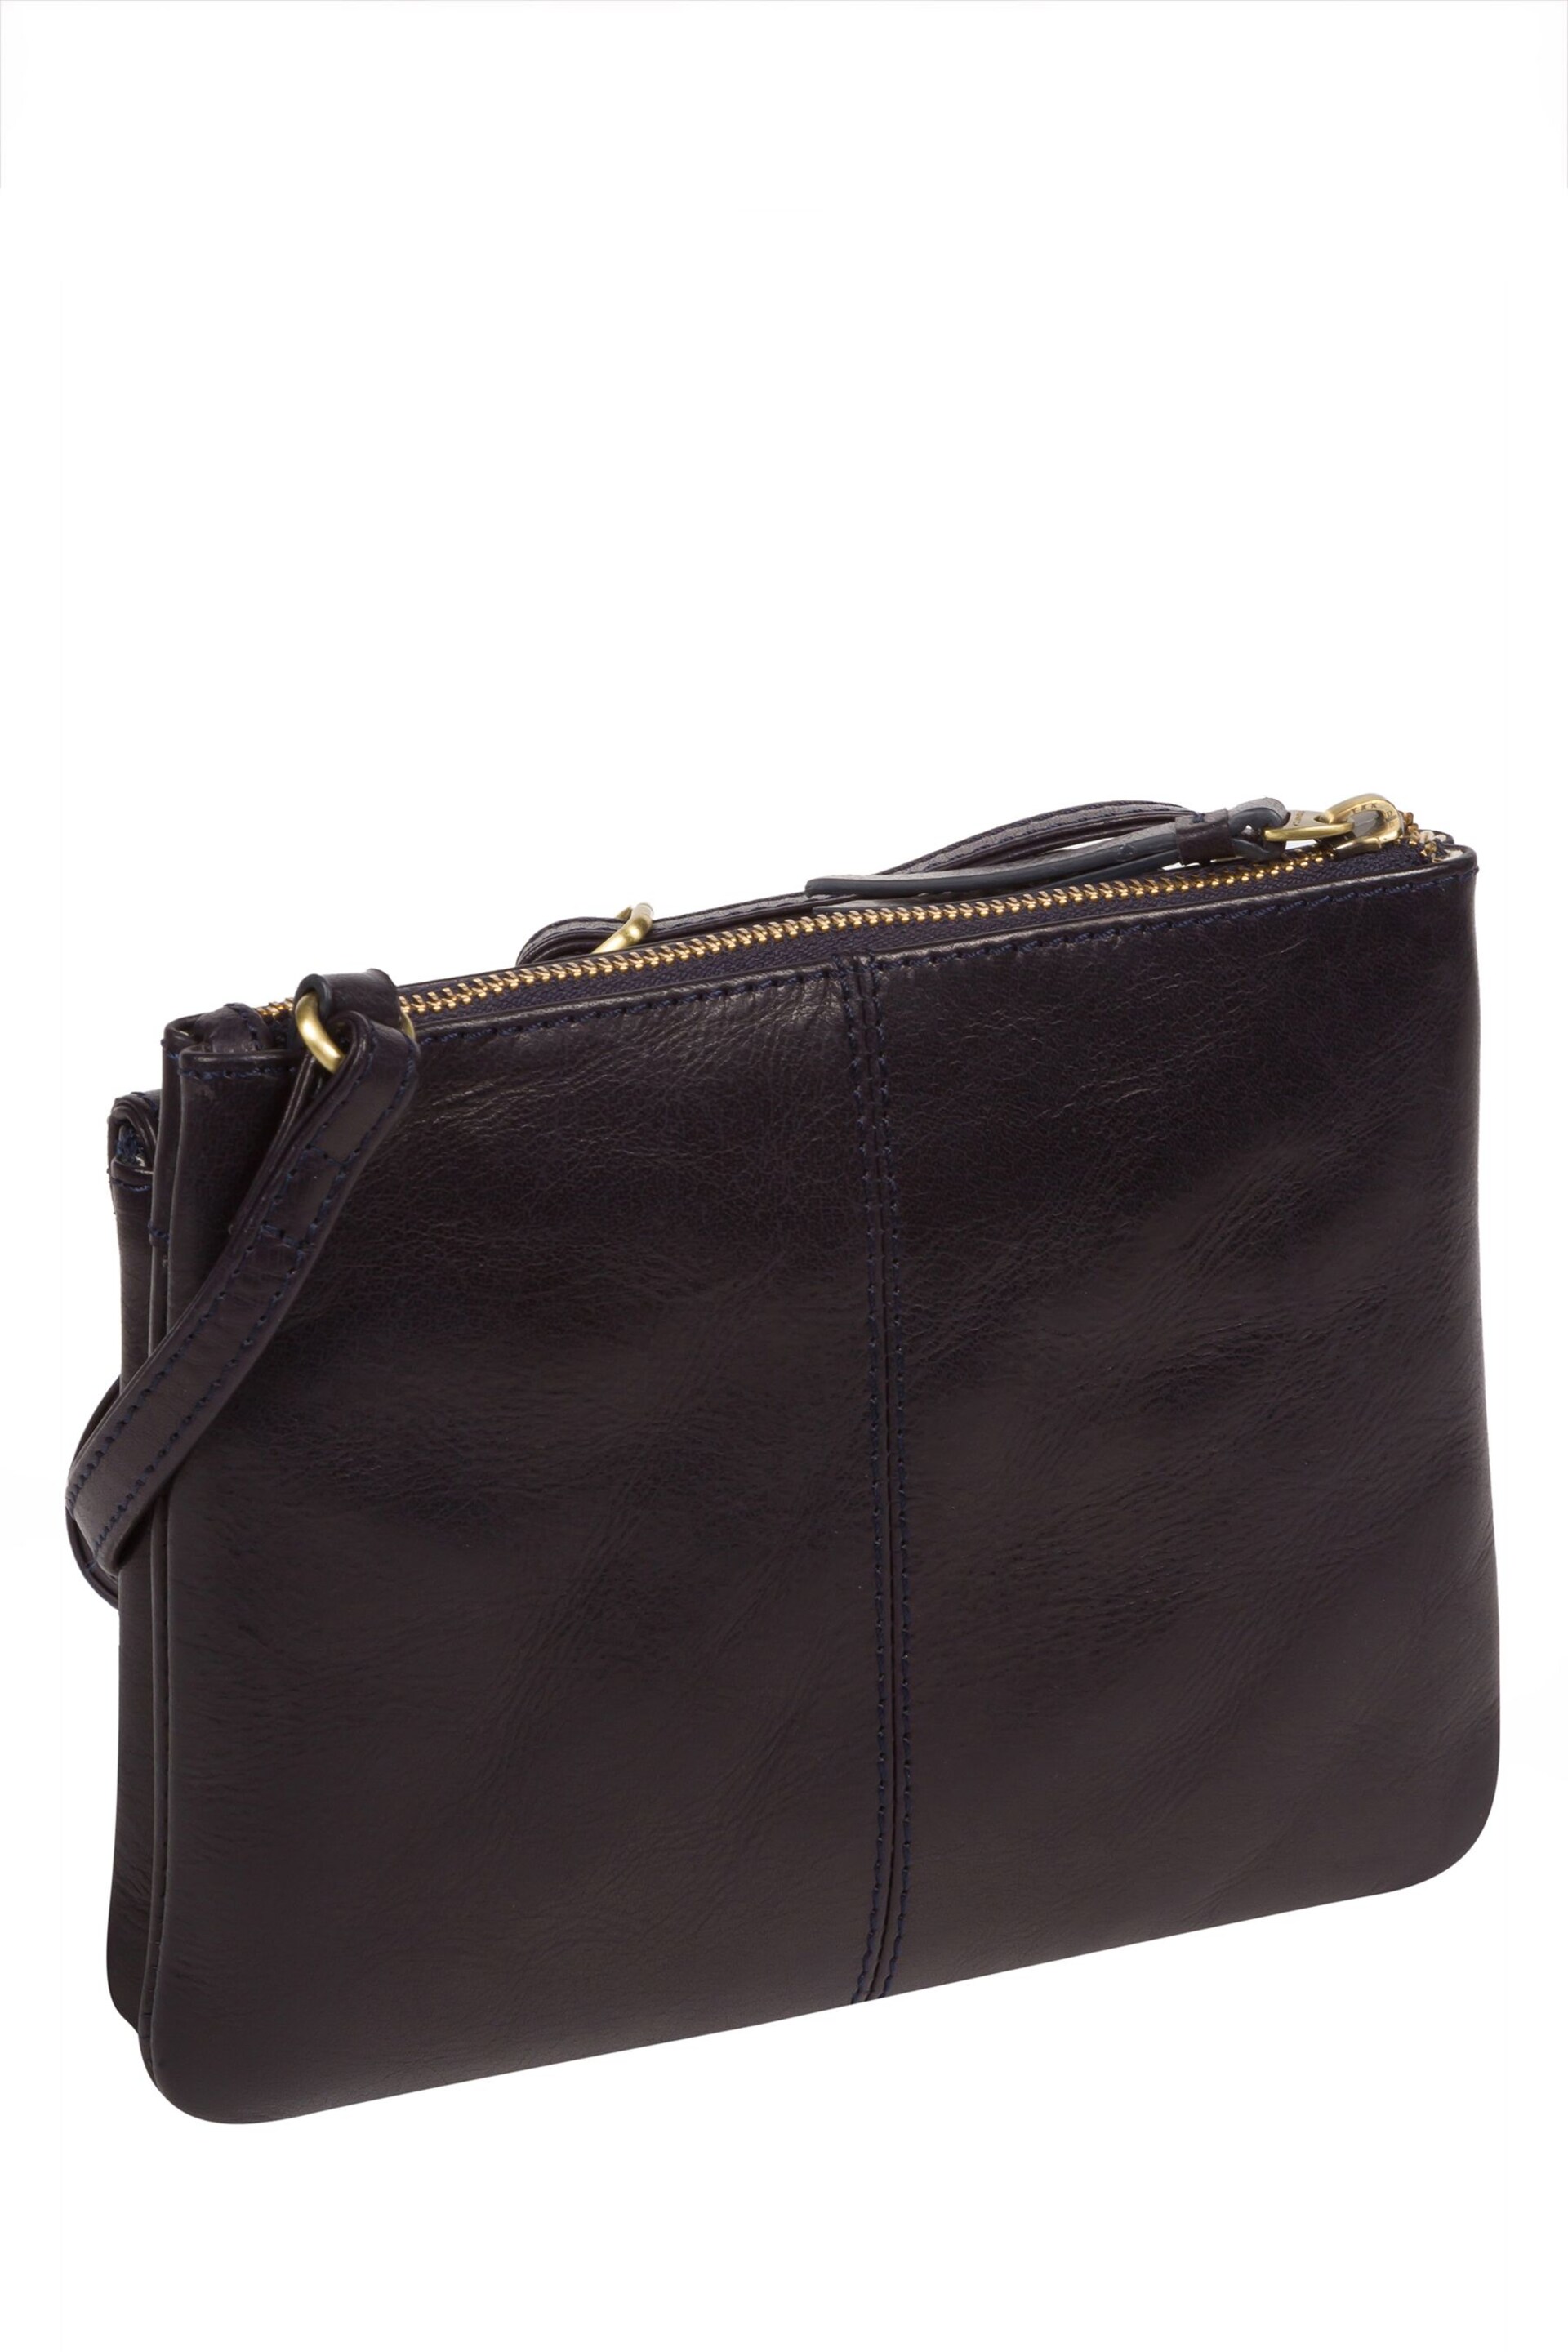 Conkca Tillie Leather Cross-Body Bag - Image 3 of 6